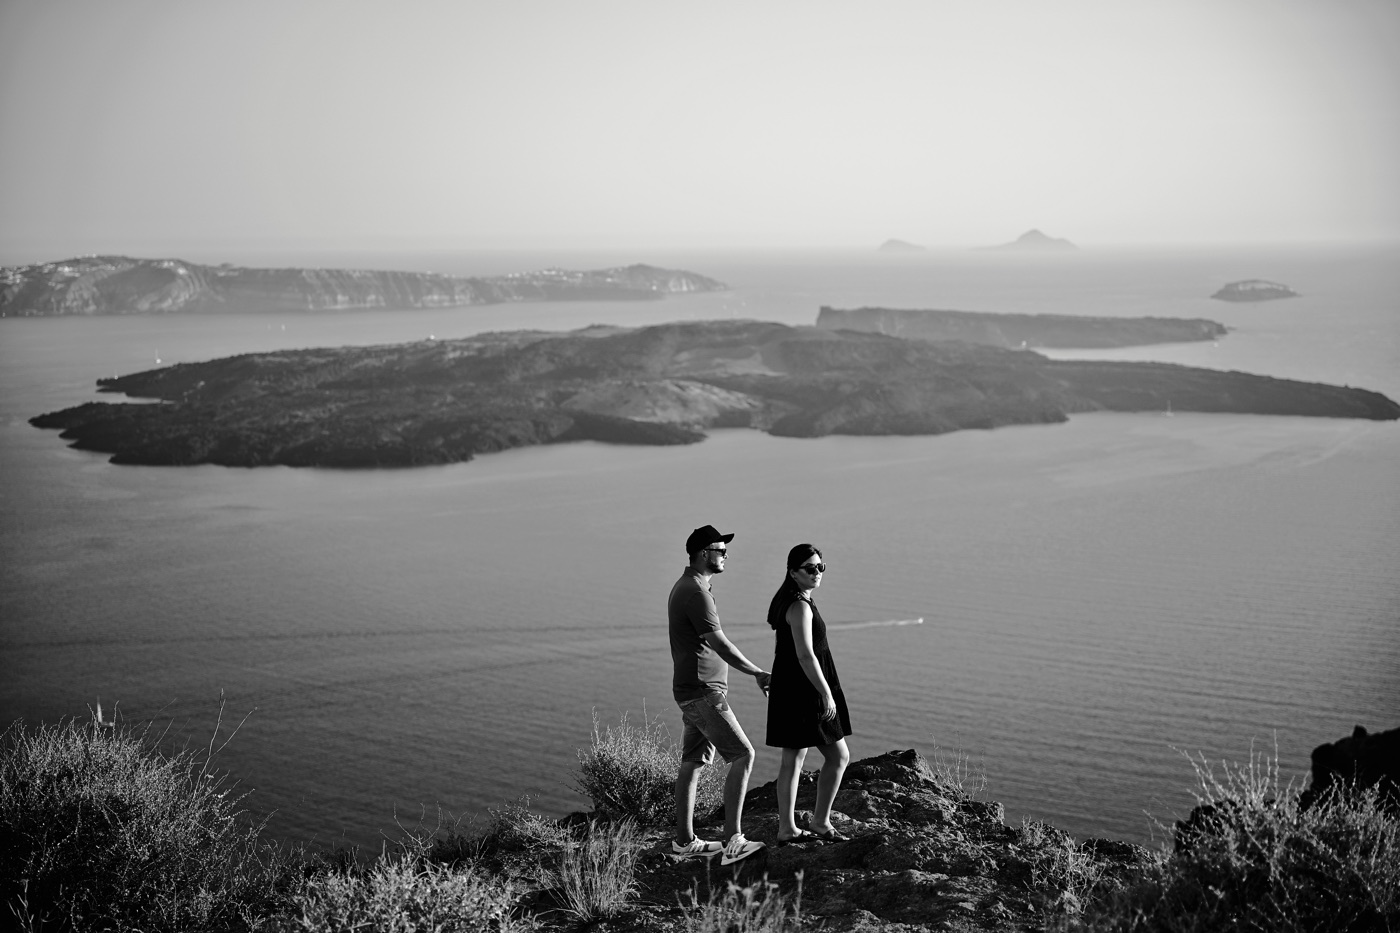 sesja zdj臋ciowa na Santorini